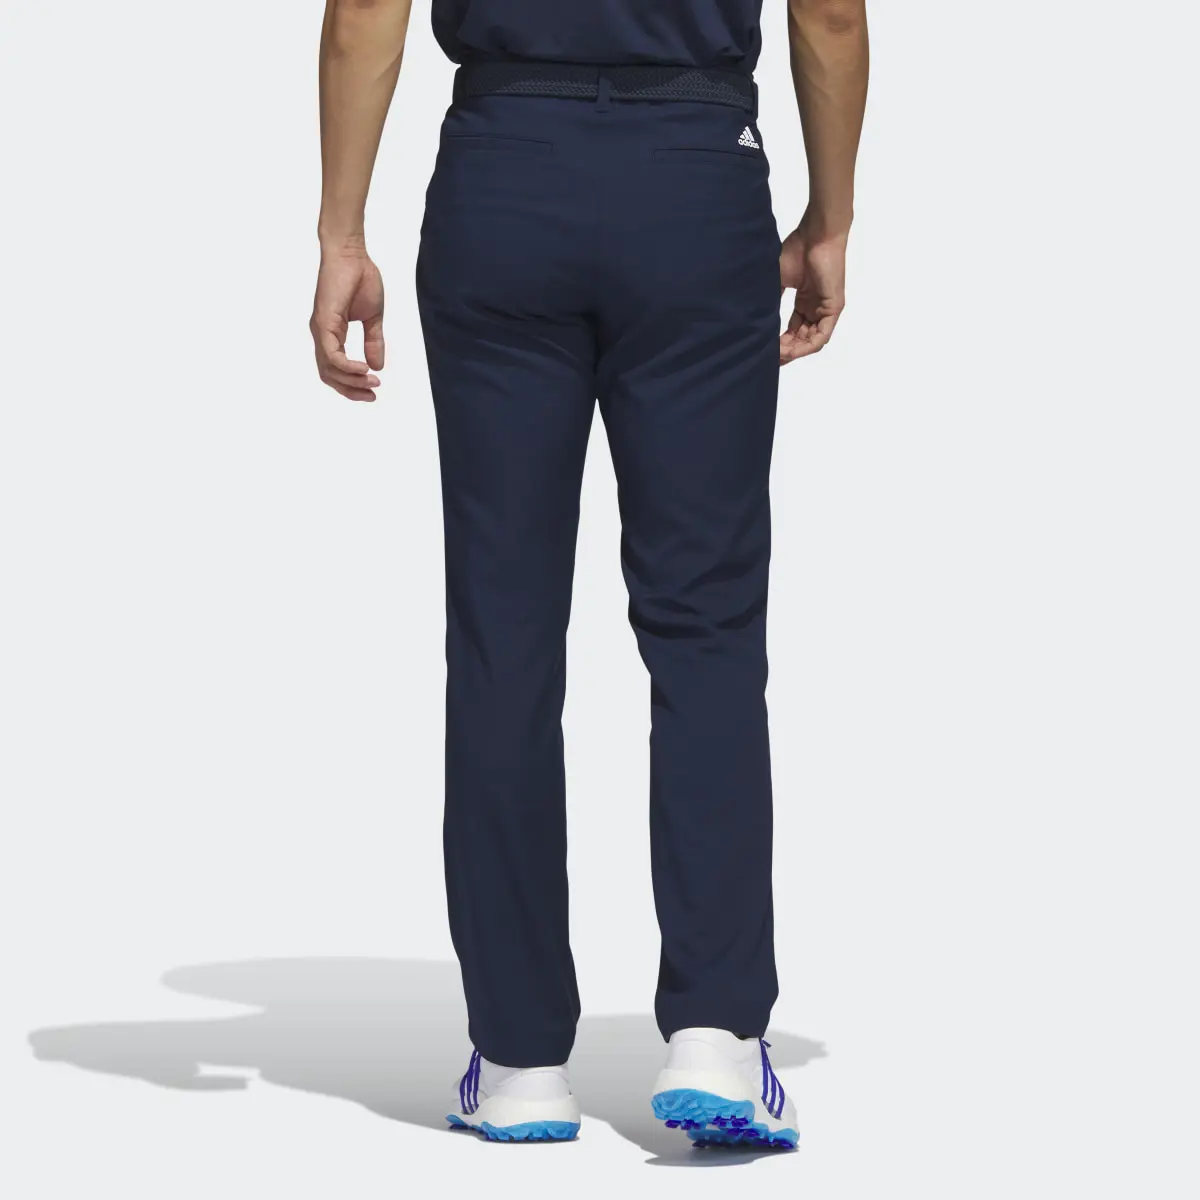 Adidas Ultimate365 Pants. 2